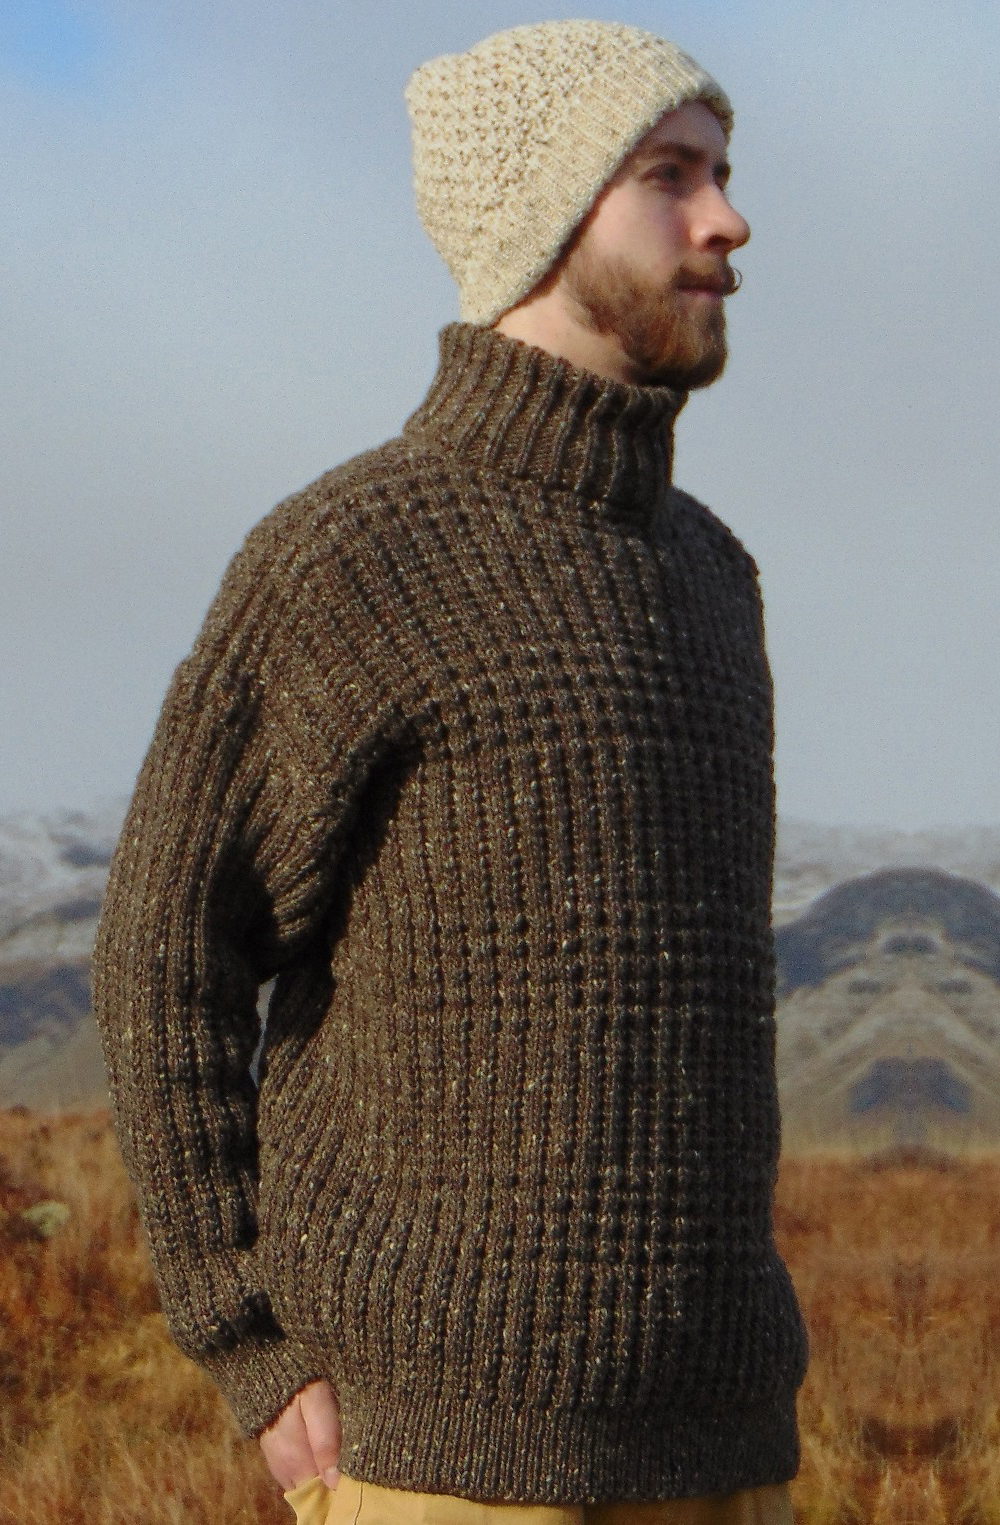 Men's Cable Knit Crew Neck Aran Wool Sweater|Charcoal|Aran Sweater Market